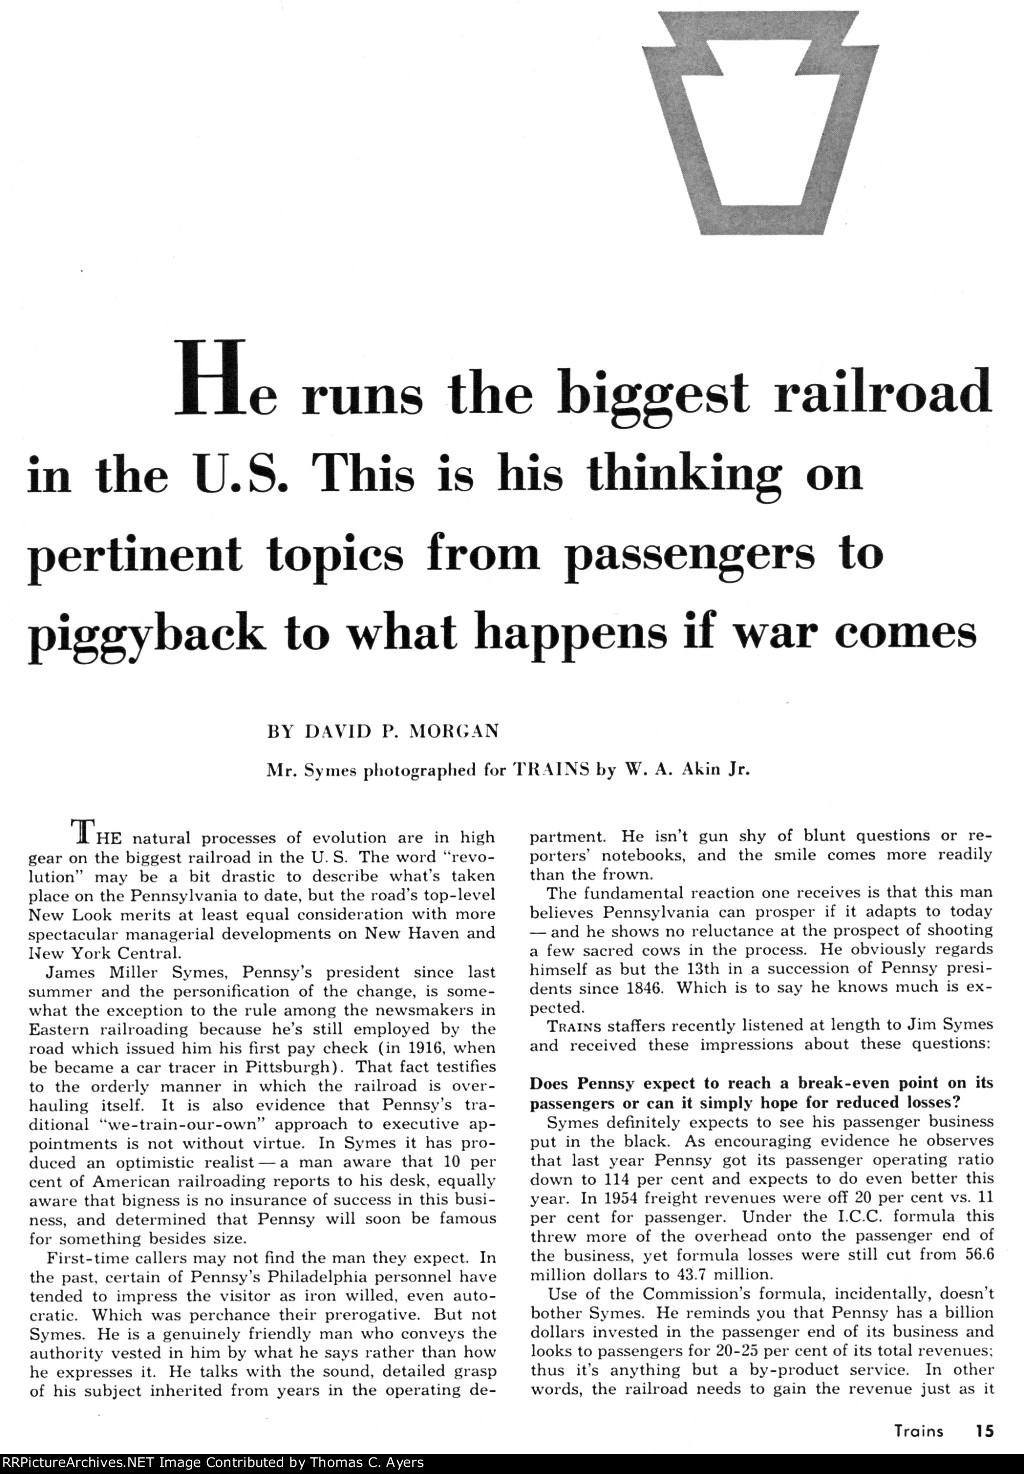 "Straight Talk," Page 15, 1955